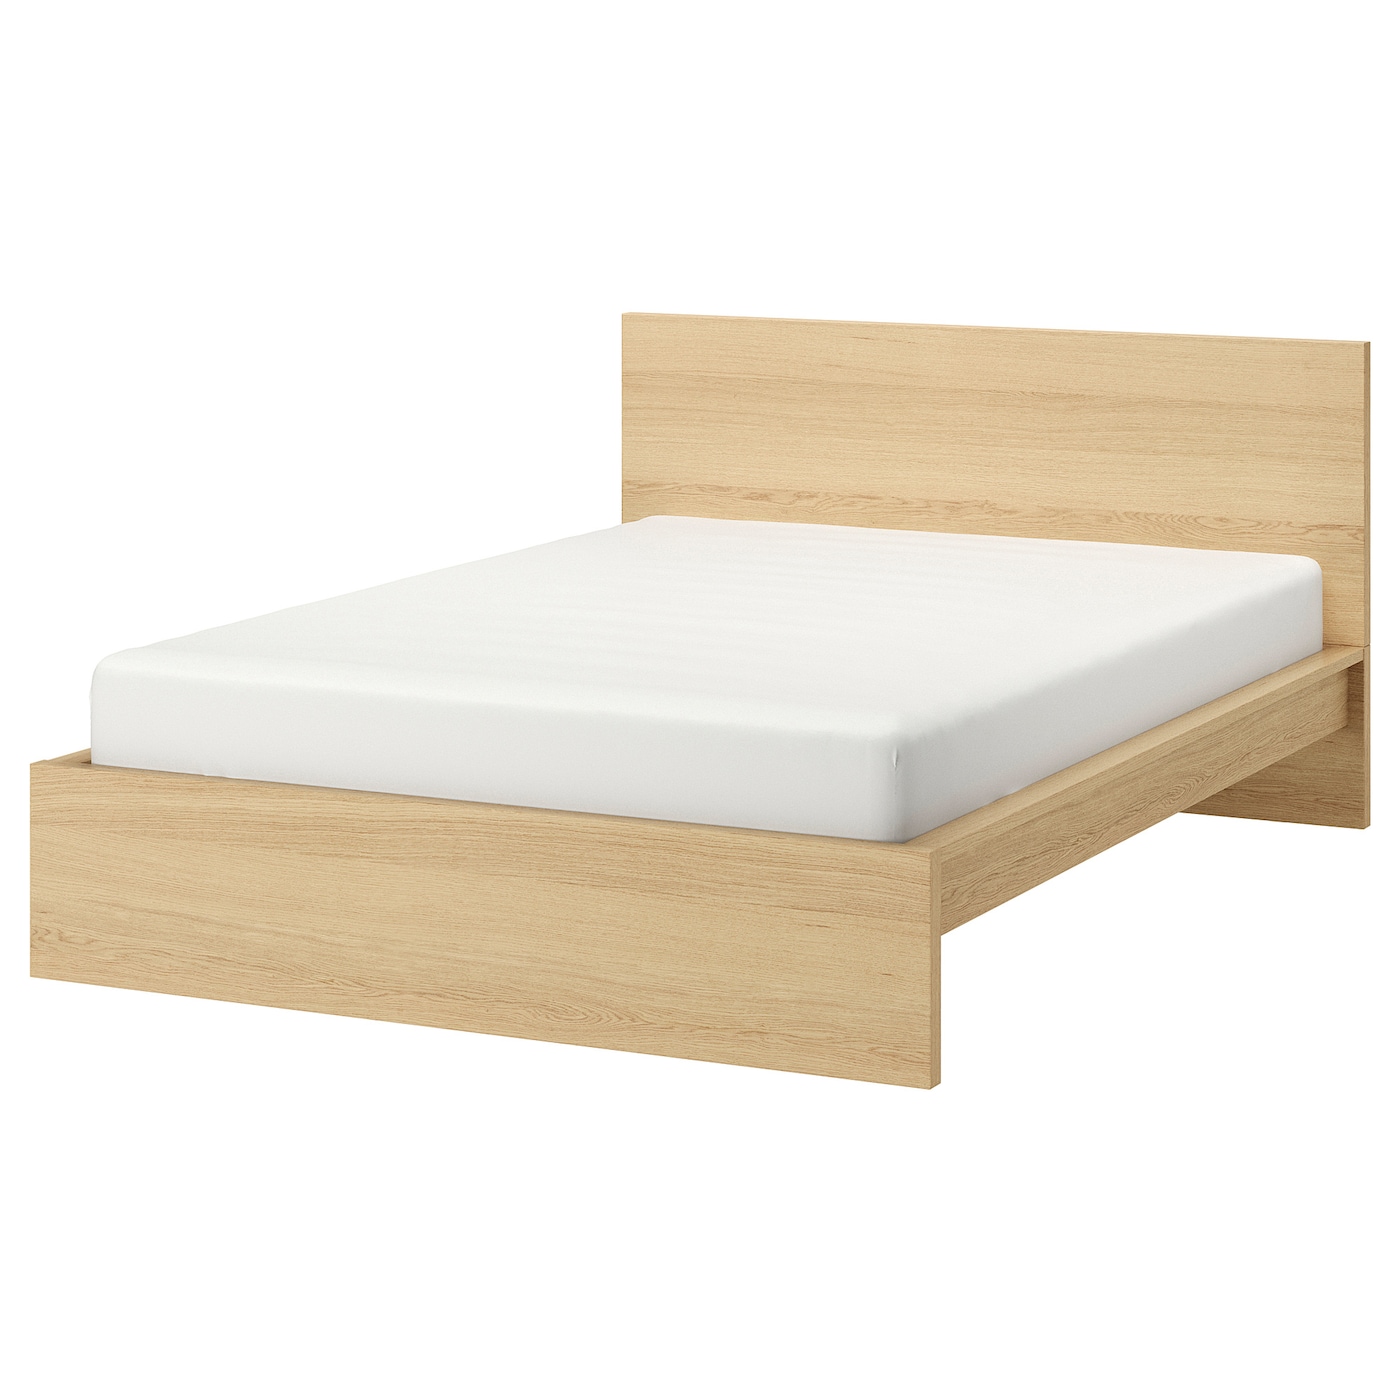 Каркас кровати - IKEA MALM/LUROY/LURÖY, 160x200 см, дубовый шпон, беленый МАЛЬМ/ЛУРОЙ ИКЕА